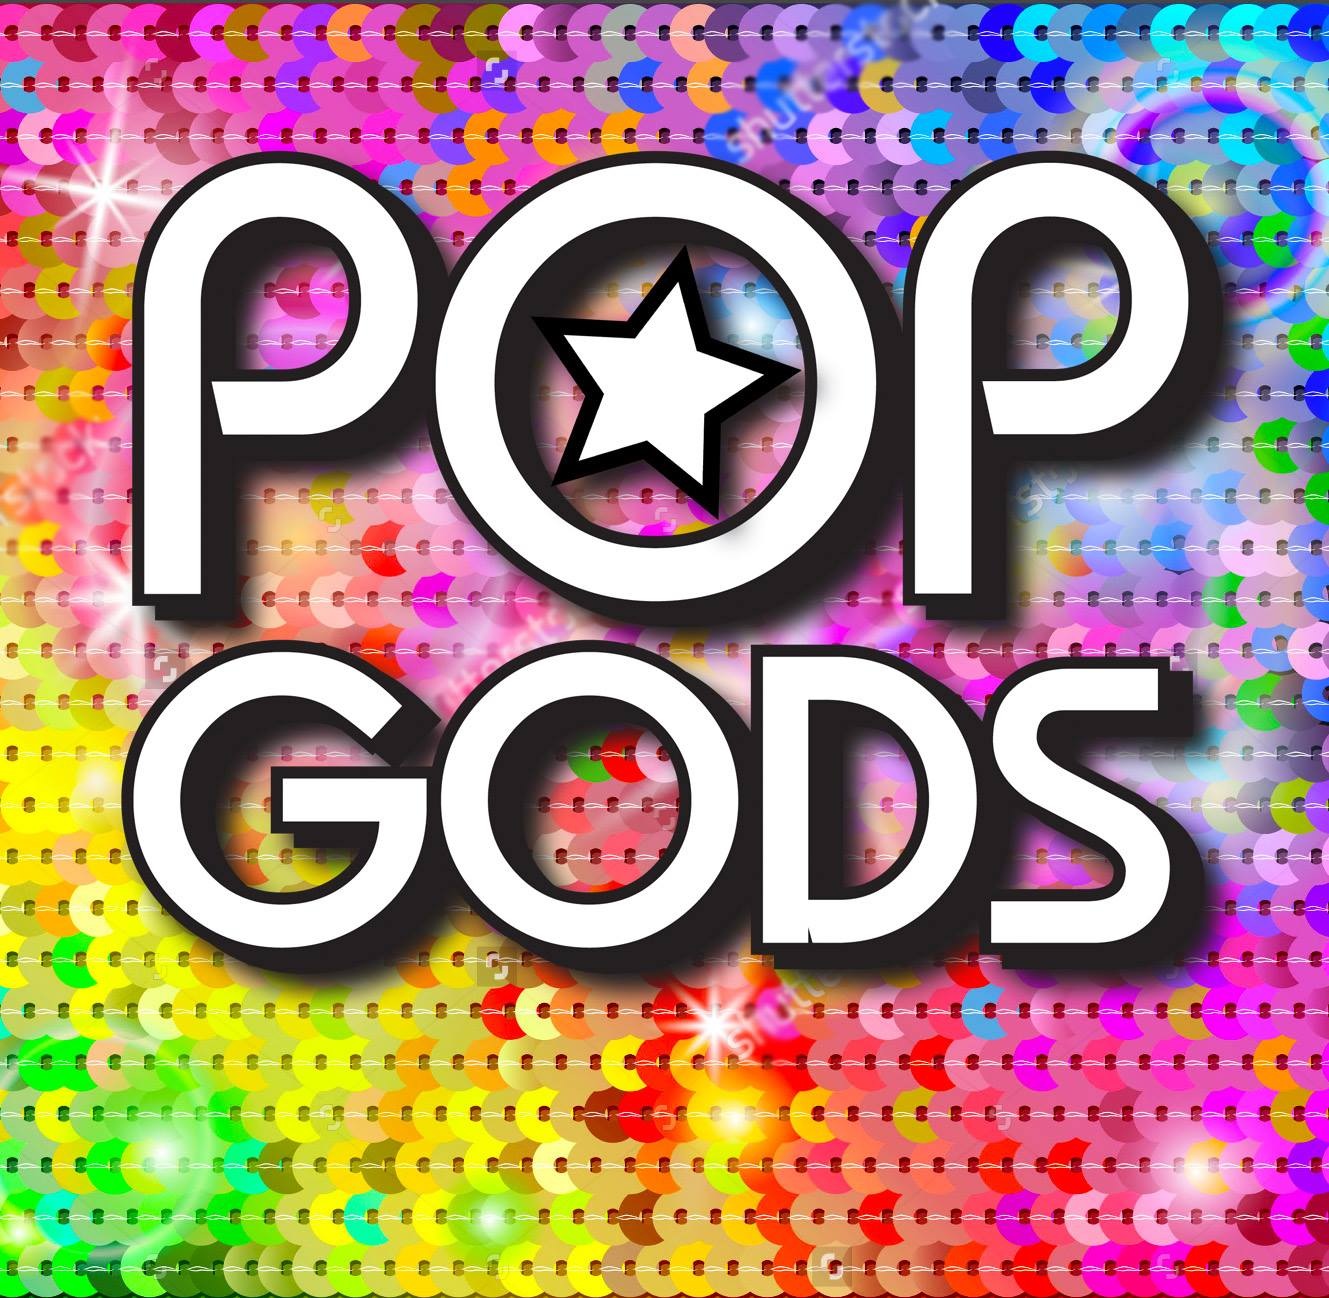 POP Gods with www.corporateevents.ie